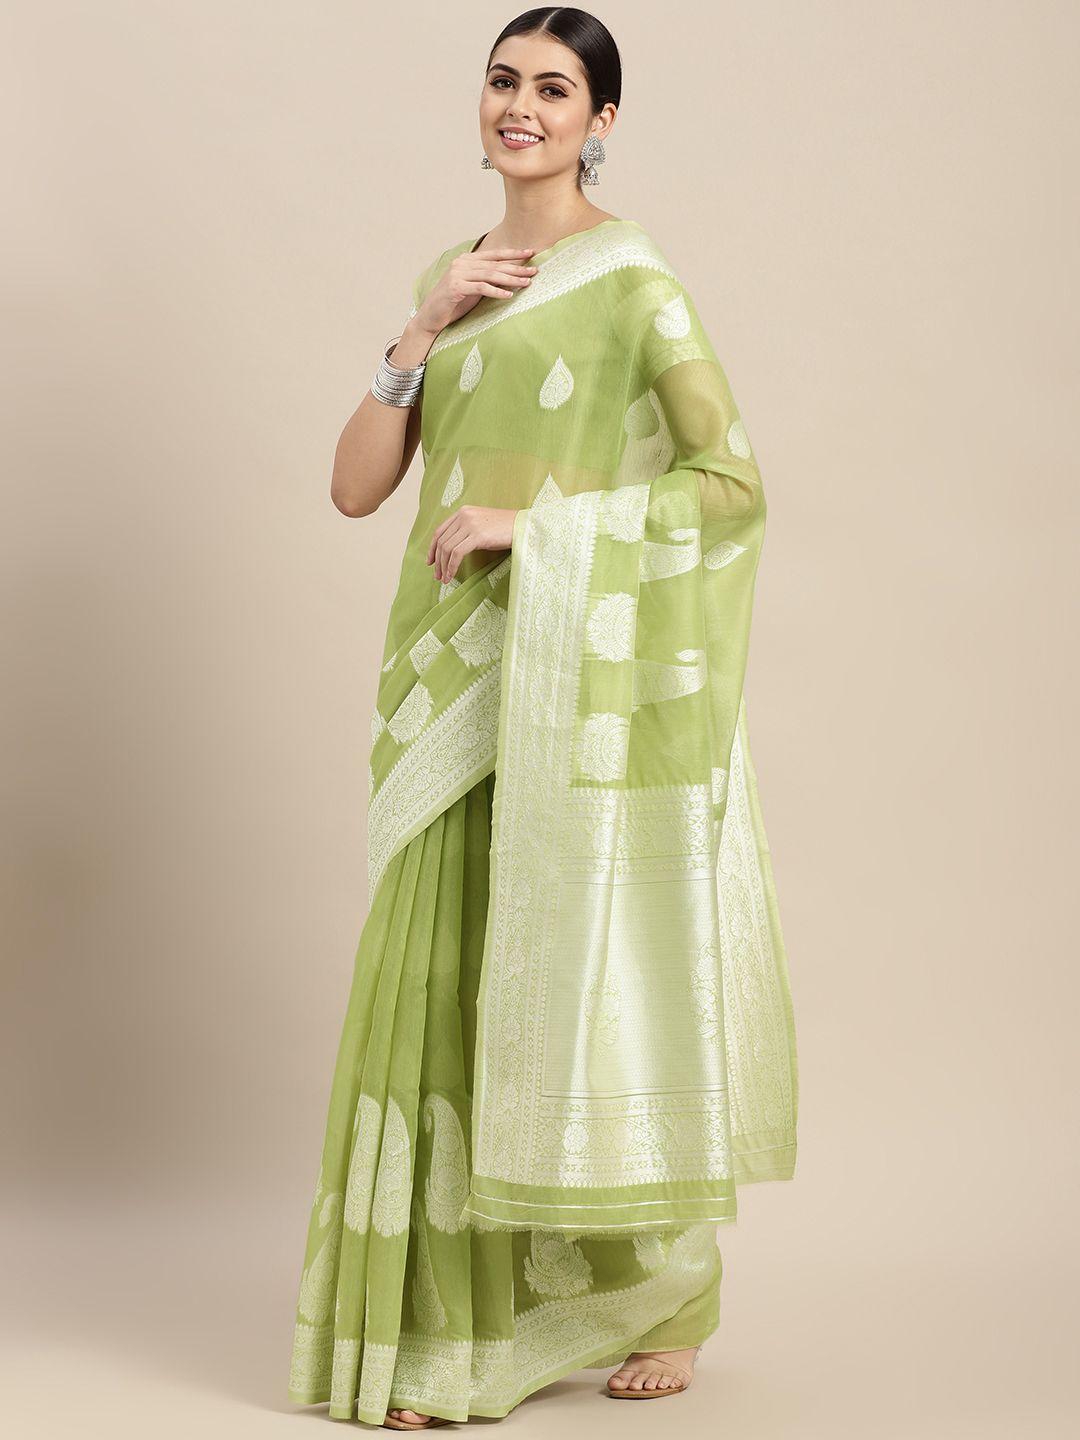 vairagee green & white ethnic motifs pure cotton saree